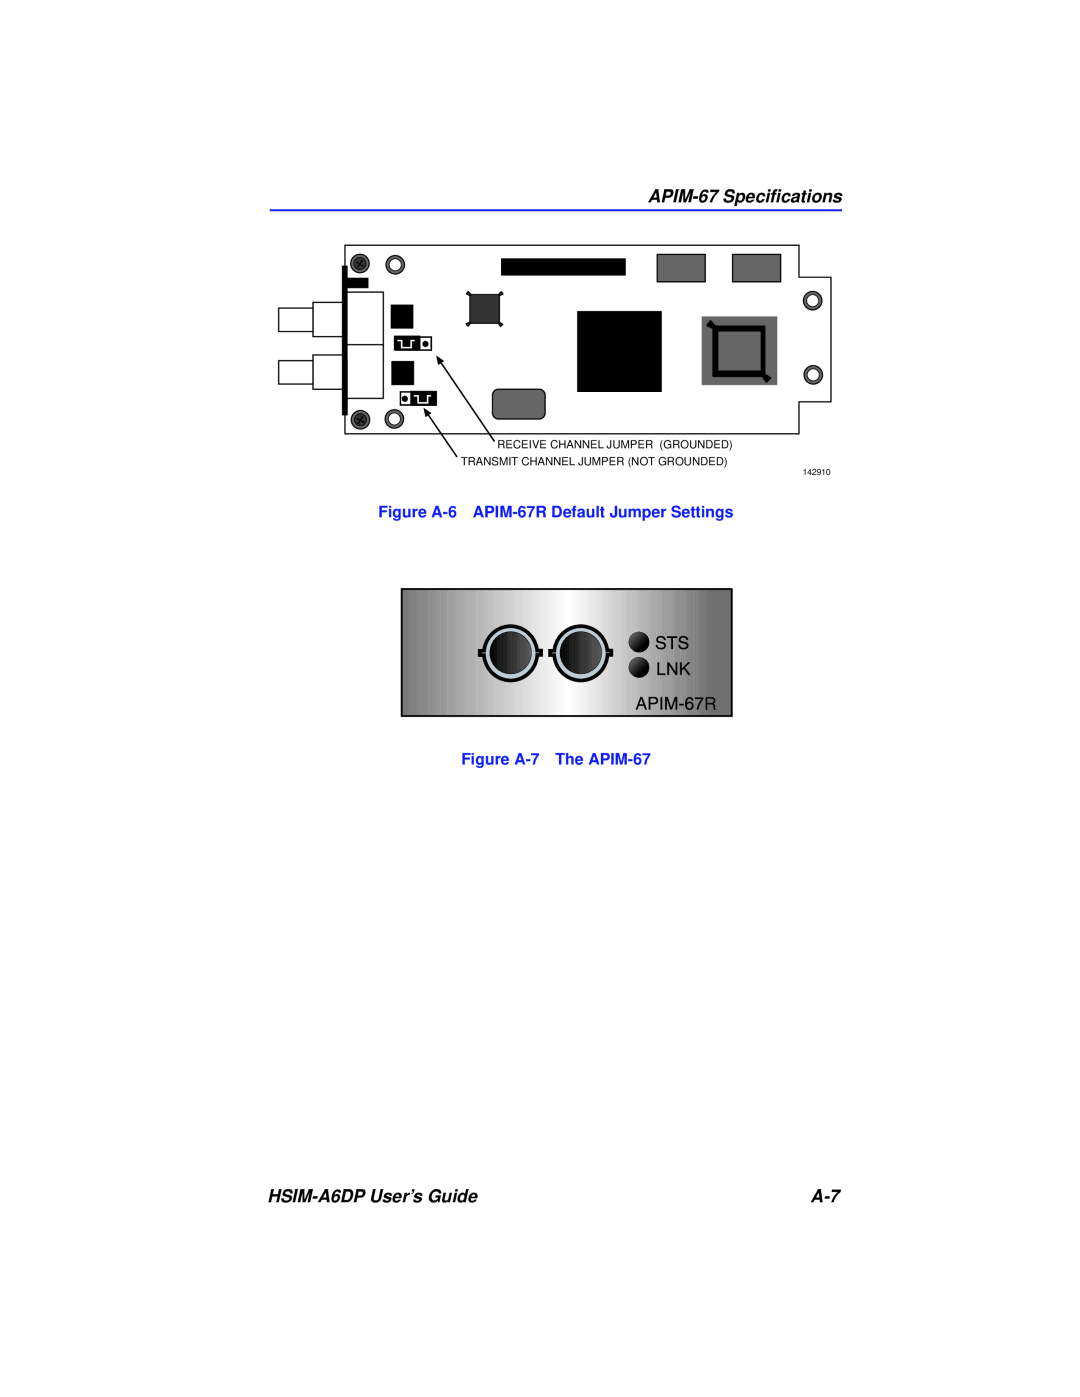 Cabletron Systems APIM-67 Speciﬁcations, HSIM-A6DP User’s Guide, Figure A-6 APIM-67R Default Jumper Settings, 142910 